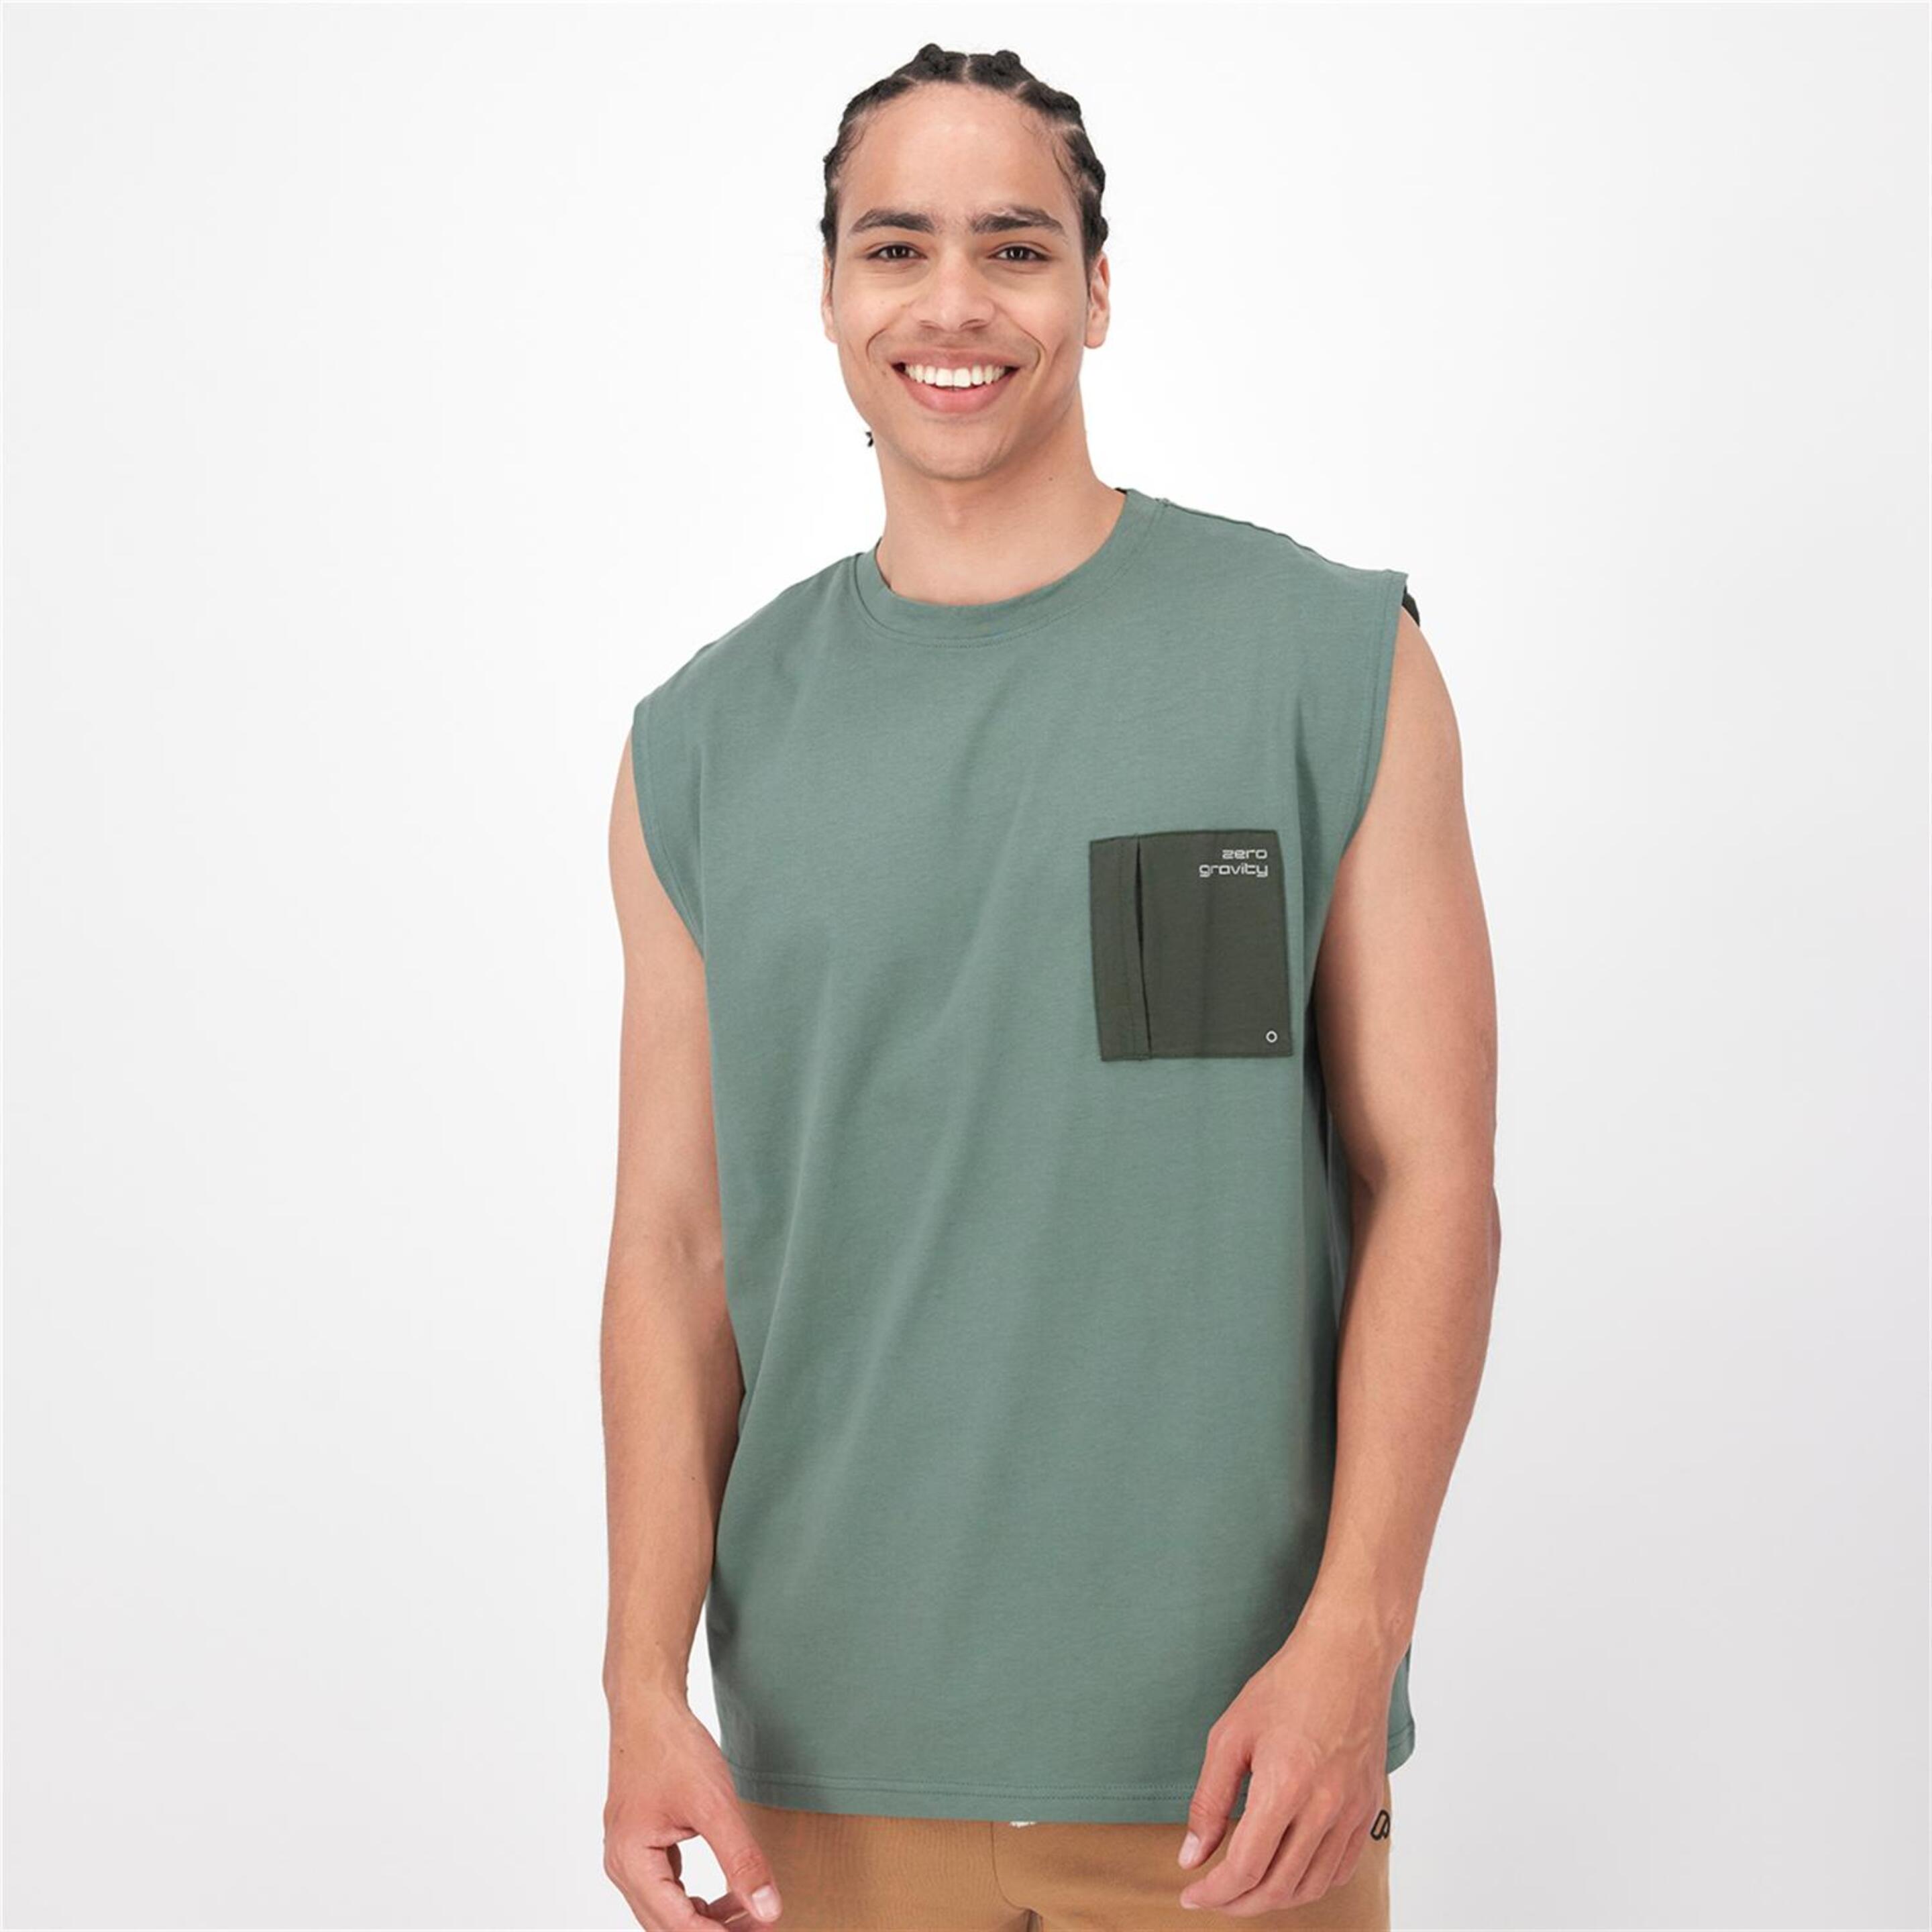 Silver Unlimited - verde - Camiseta Sin Mangas Hombre